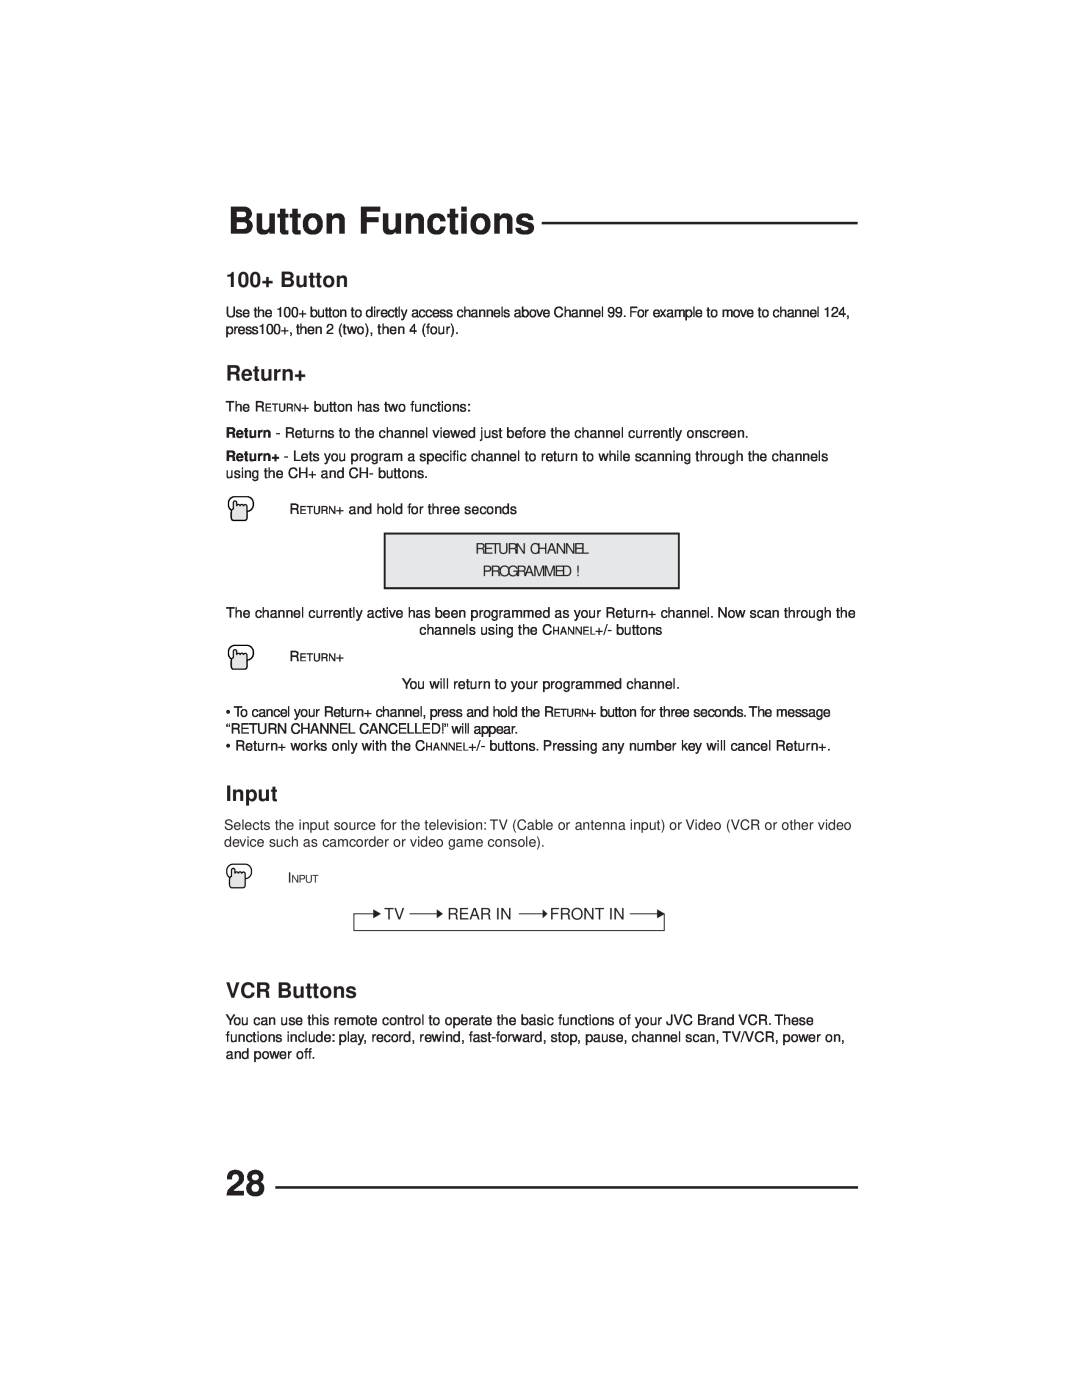 JVC AV-27GFH manual 100+ Button, Return+, Input, VCR Buttons, Button Functions, Return Channel Programmed 